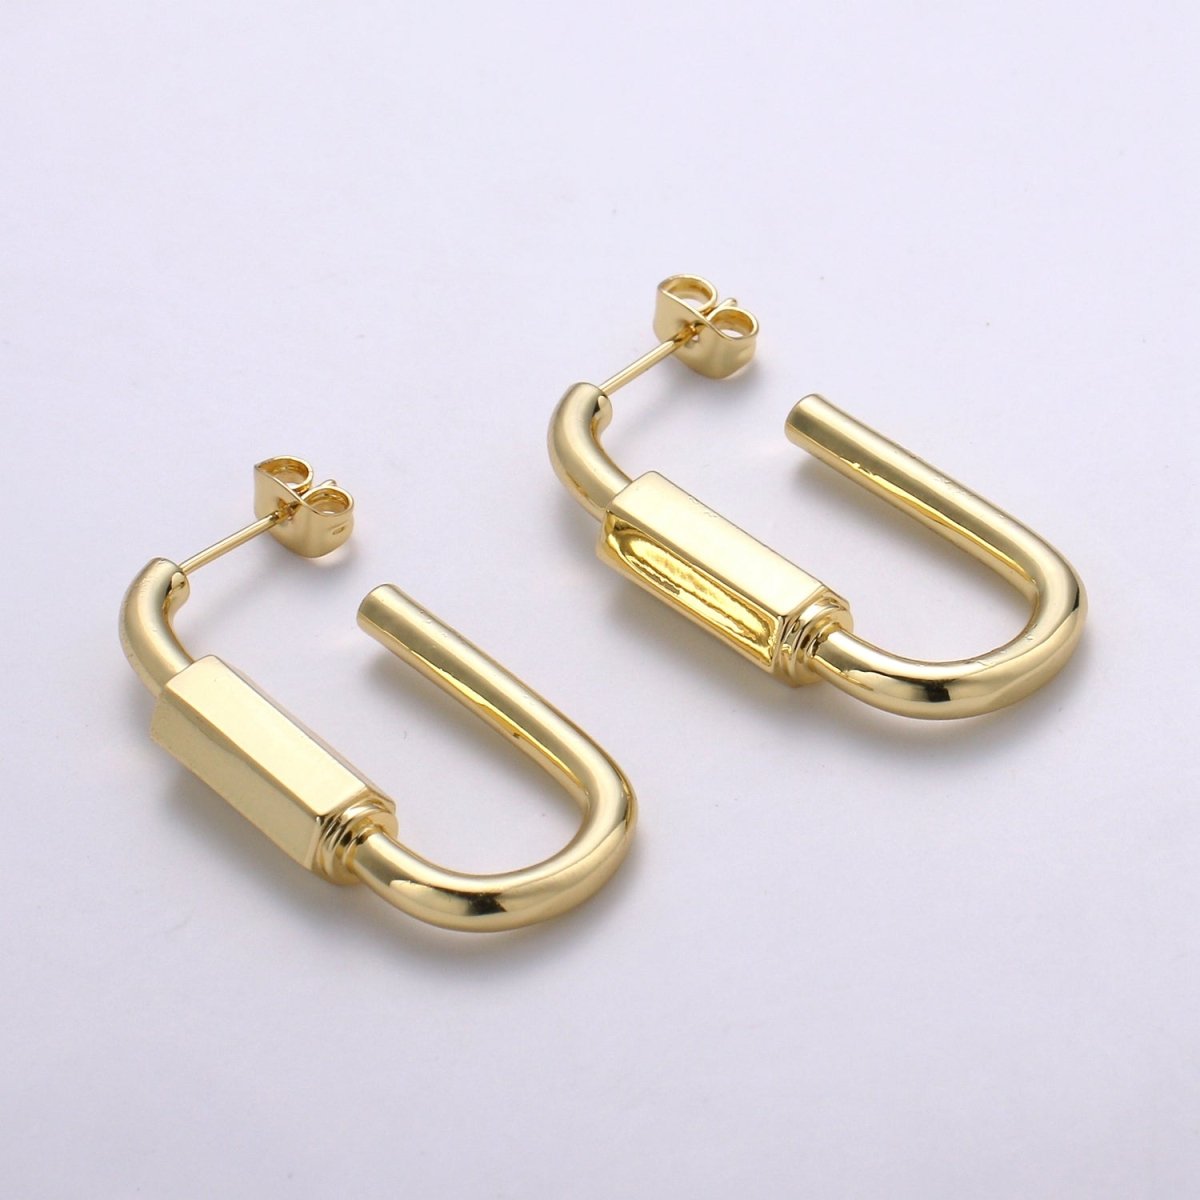 Chunky Carabiner Earrings, Thick Hoop Earrings, 14K Gold Filled Brass, Trend bold earrings, Bold gold earrings, Statement Q-279 - DLUXCA